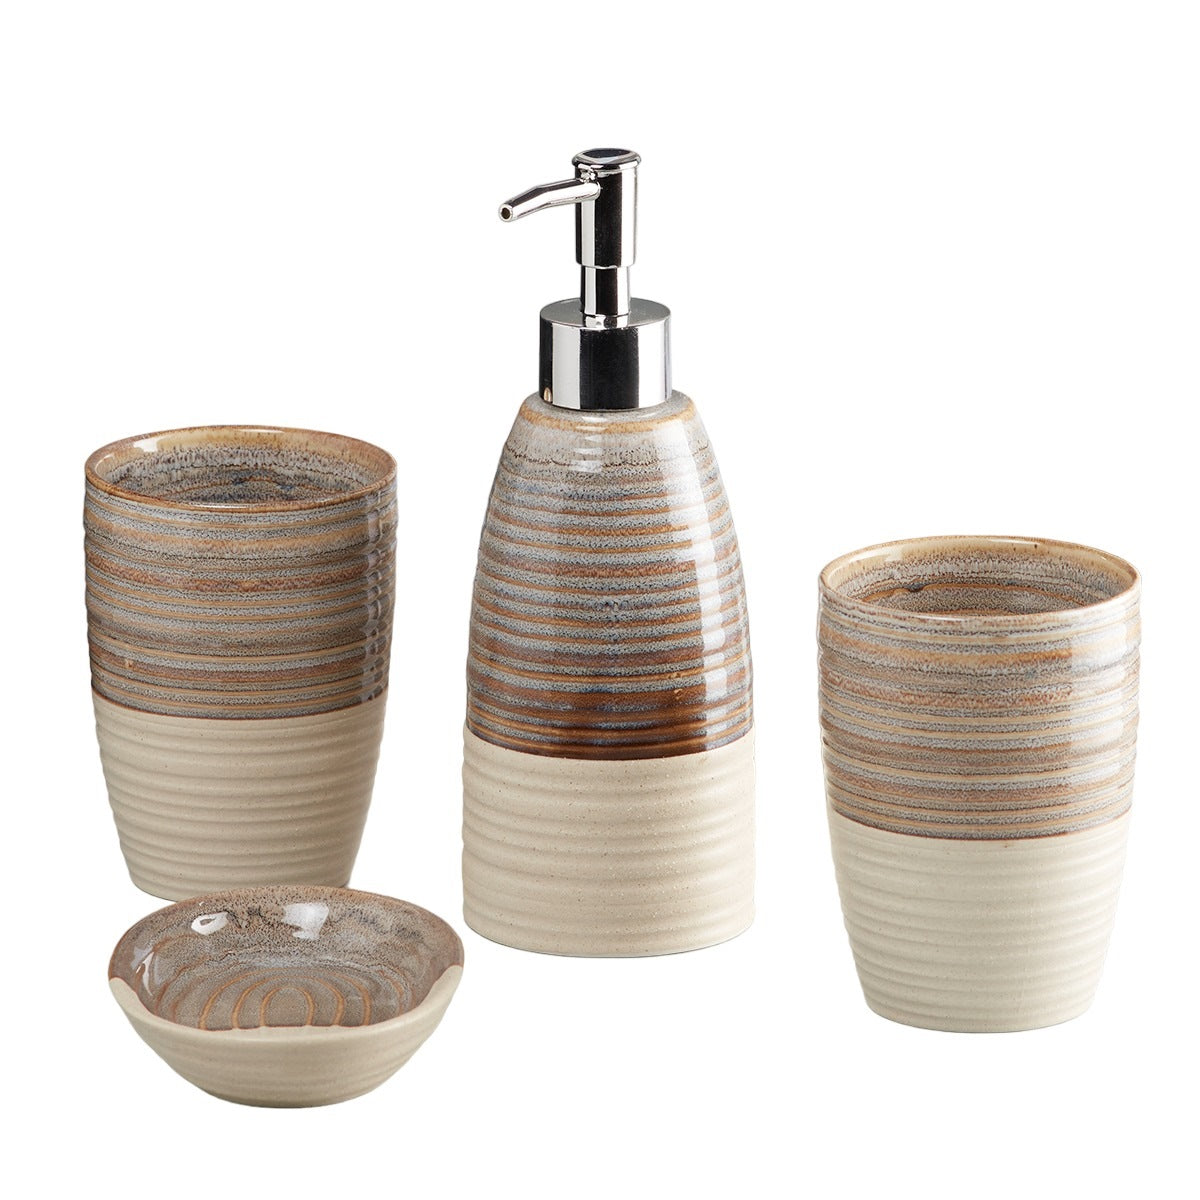 Ceramic Bathroom Set of 4 with Soap Dispenser (10099)